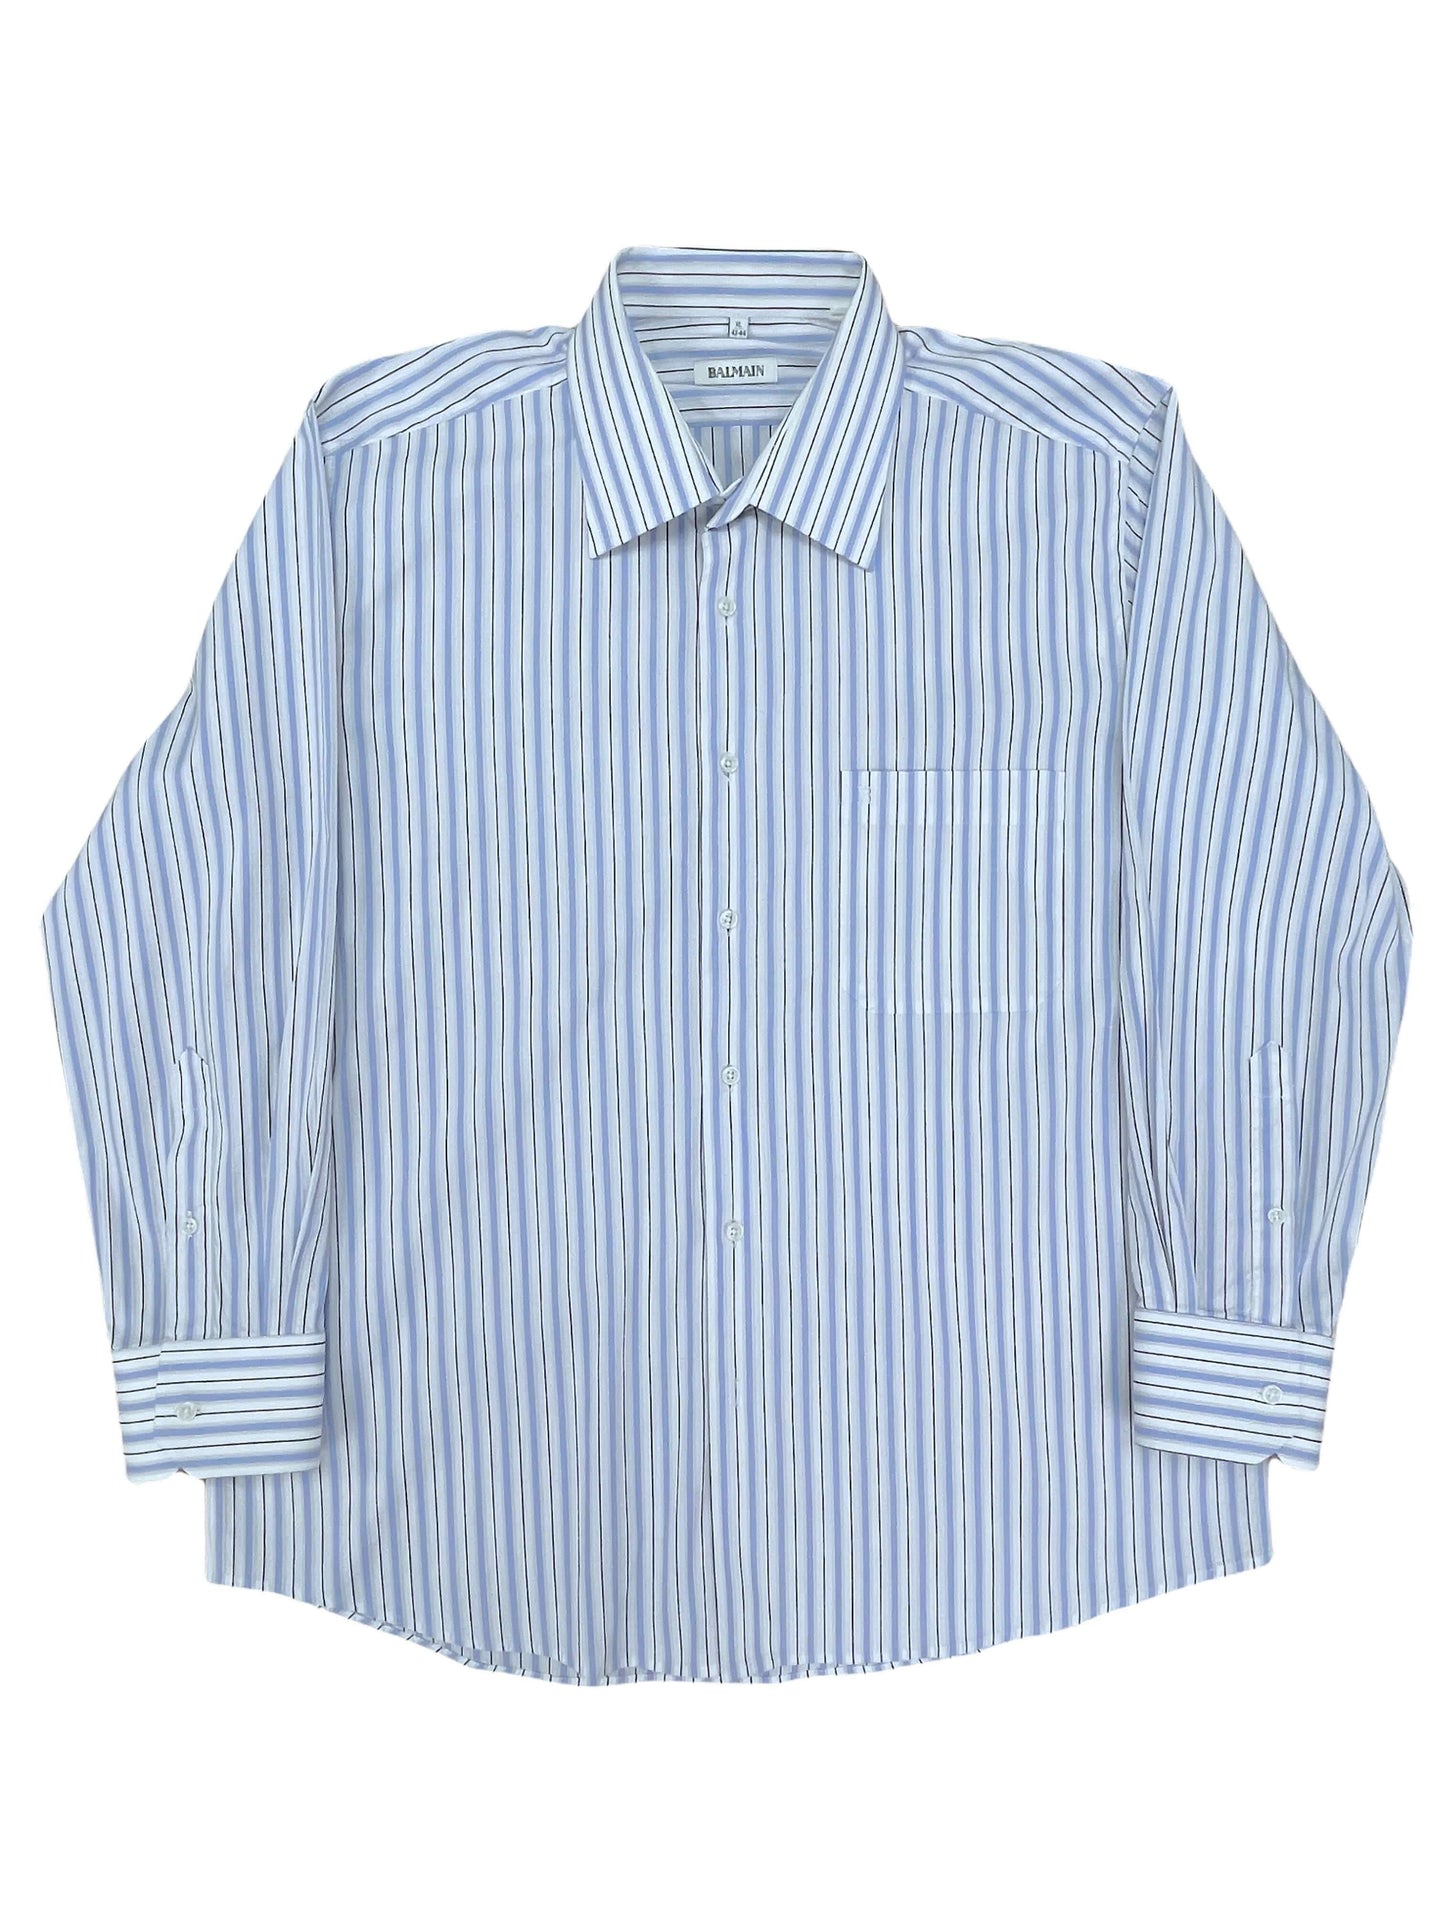 Balmain Paris Dress Shirt White Blue Striped 17.5- XL Genuine Design